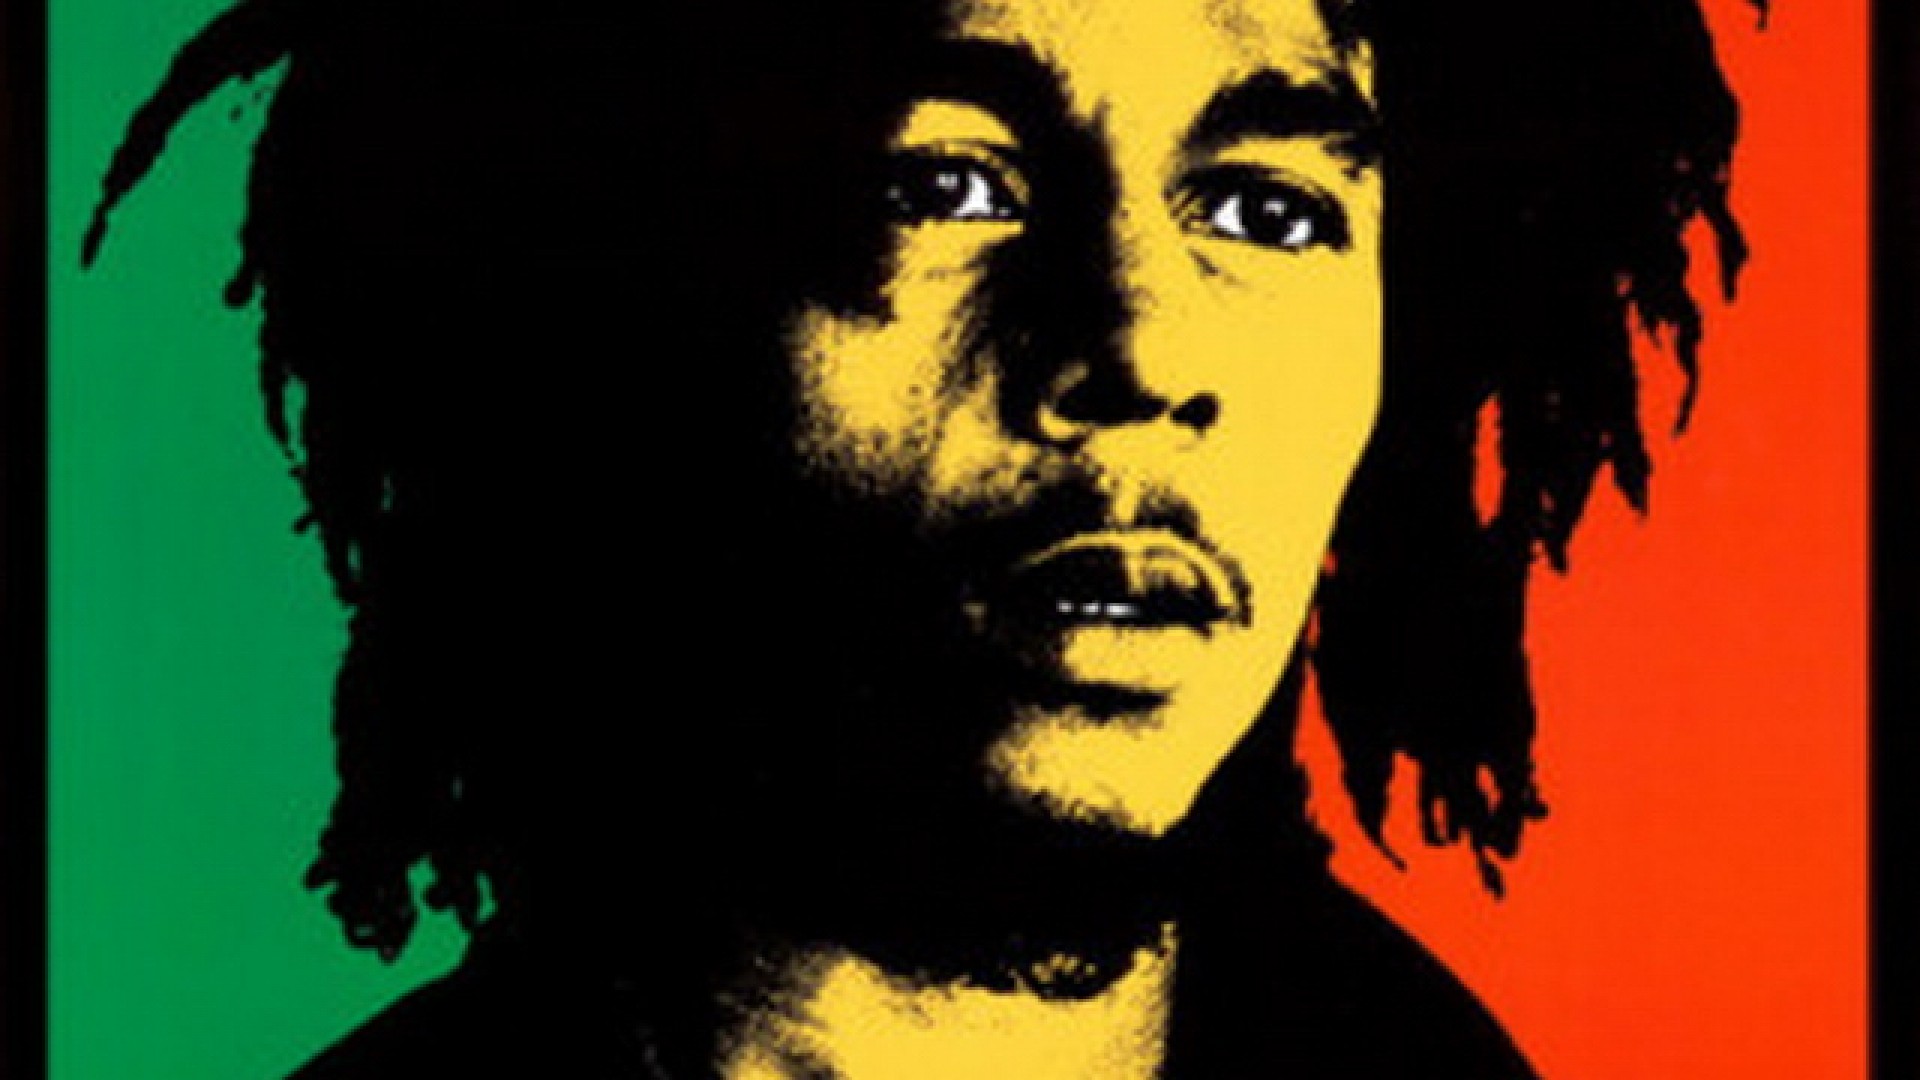 74+] Bob Marley Hd Wallpaper - WallpaperSafari